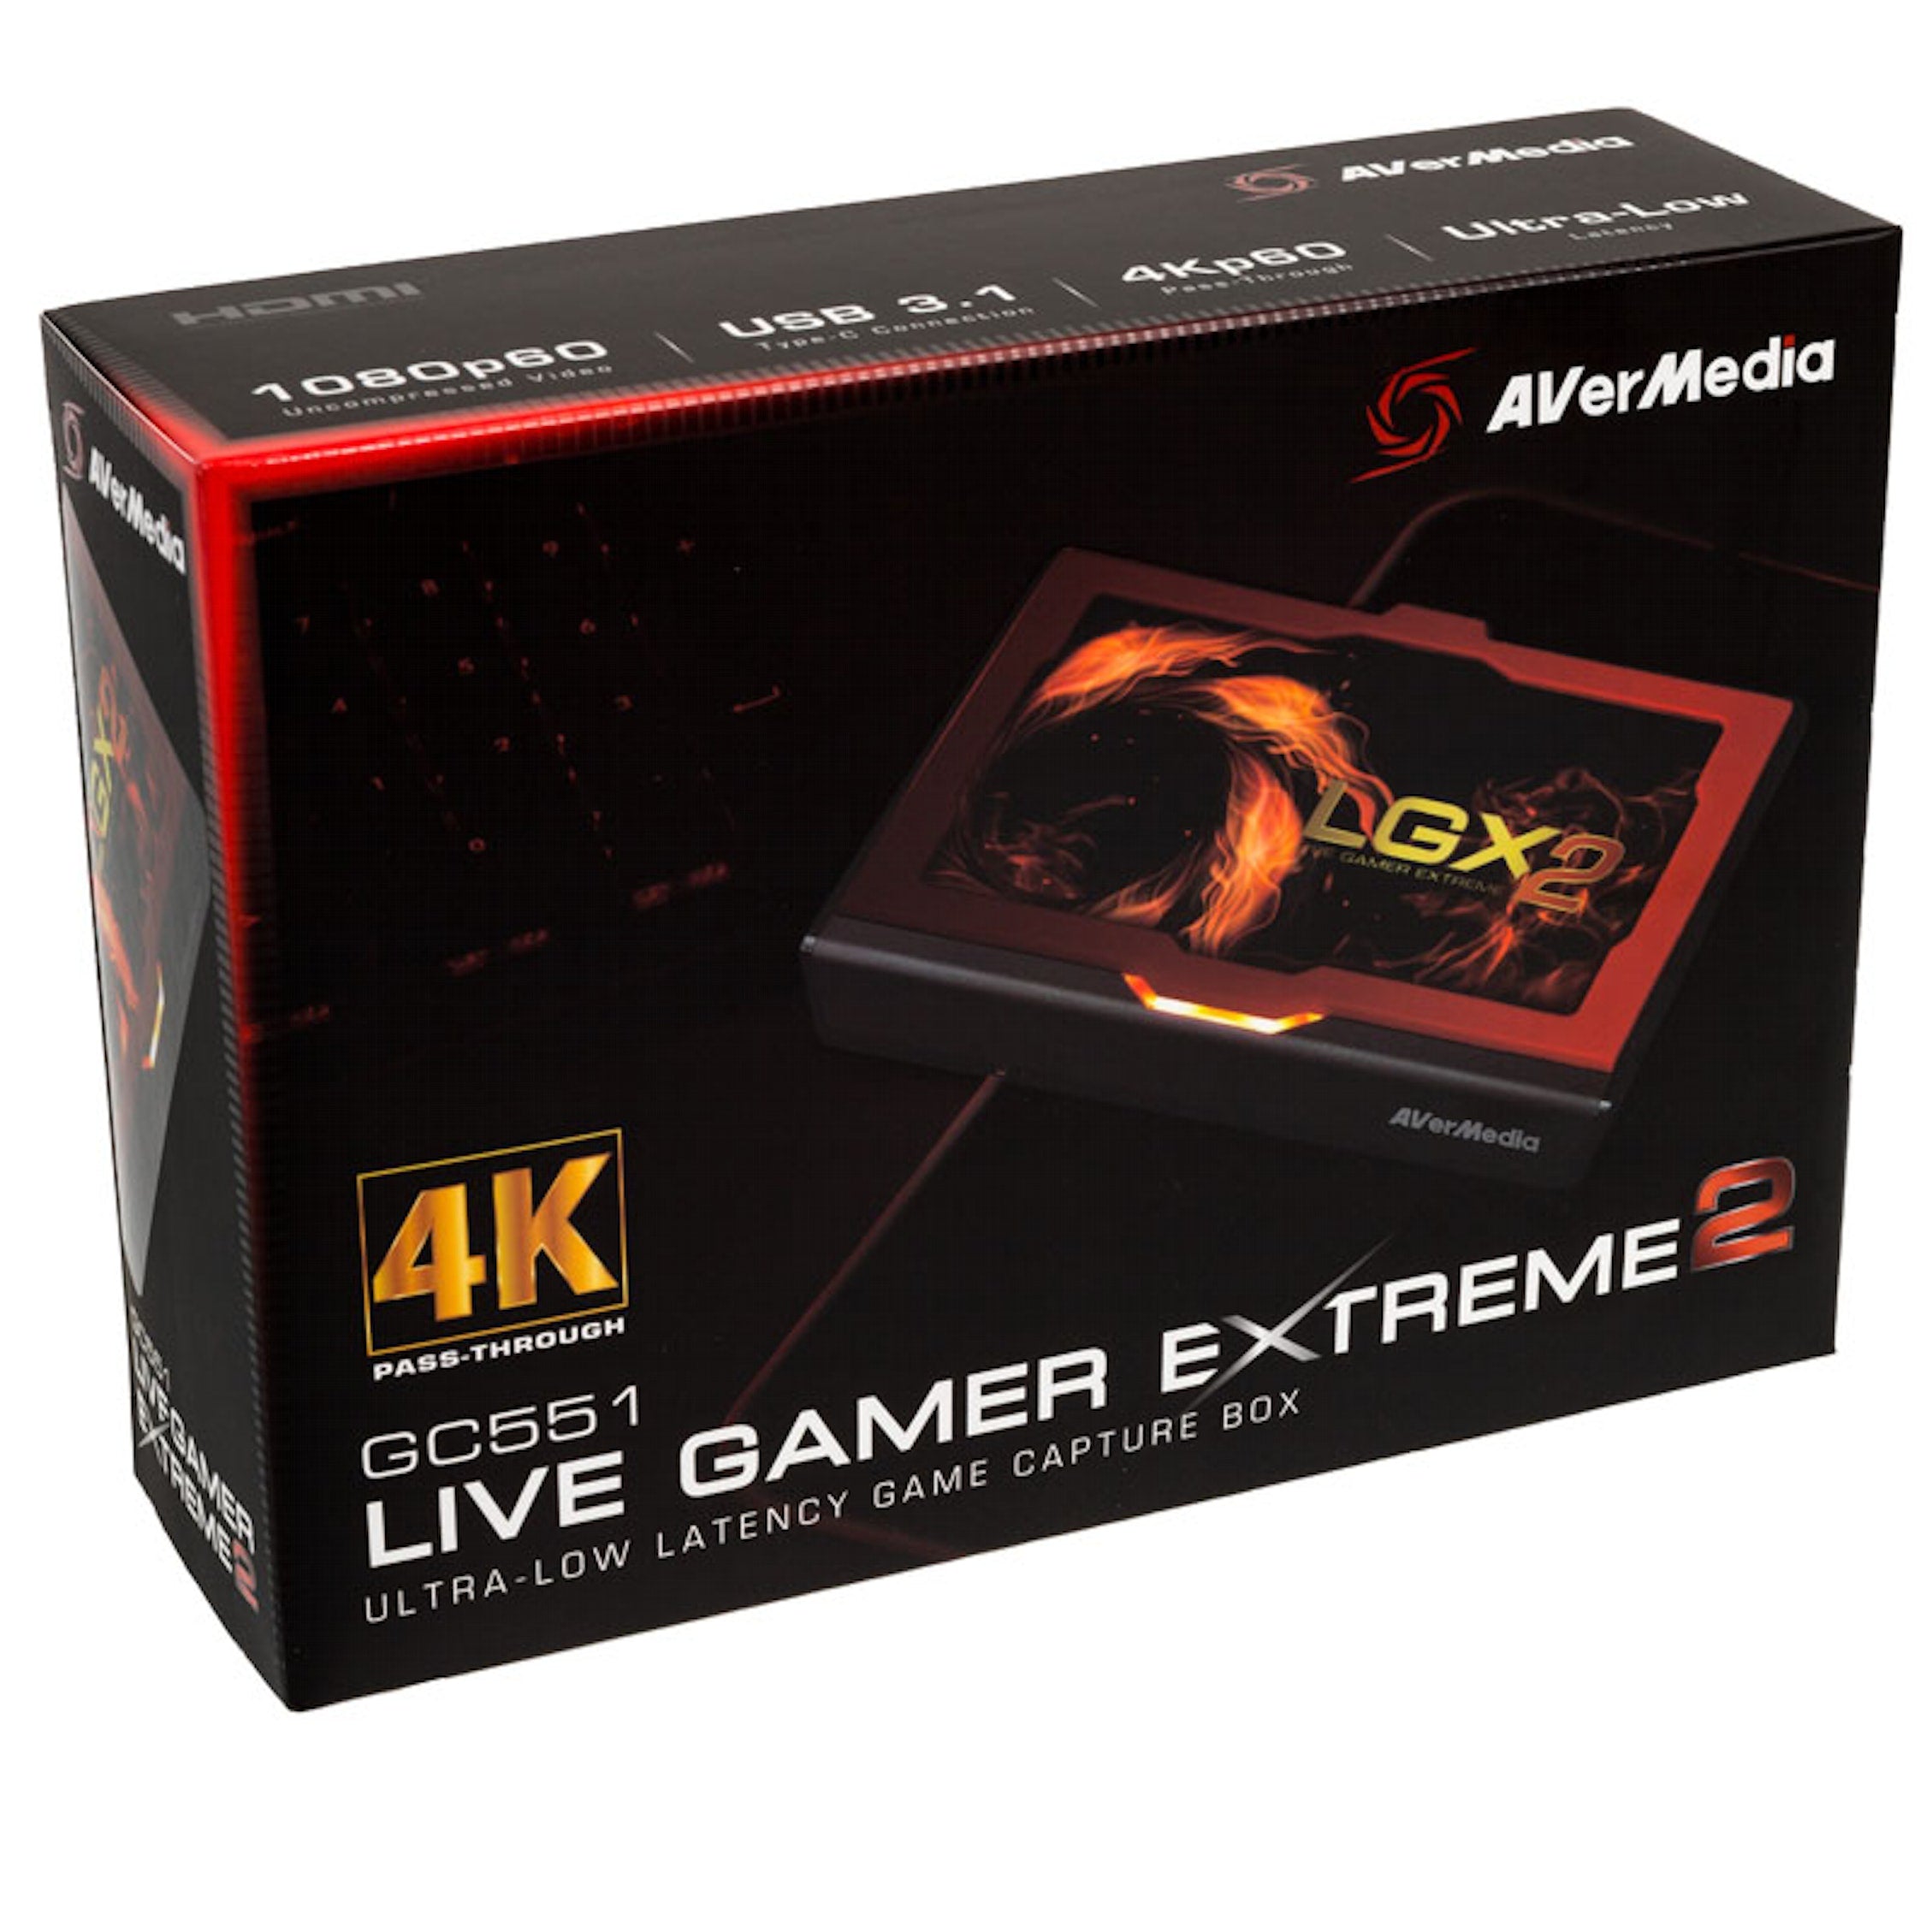 AVerMedia Live Gamer EXTREME 2 GC551 - PC/タブレット